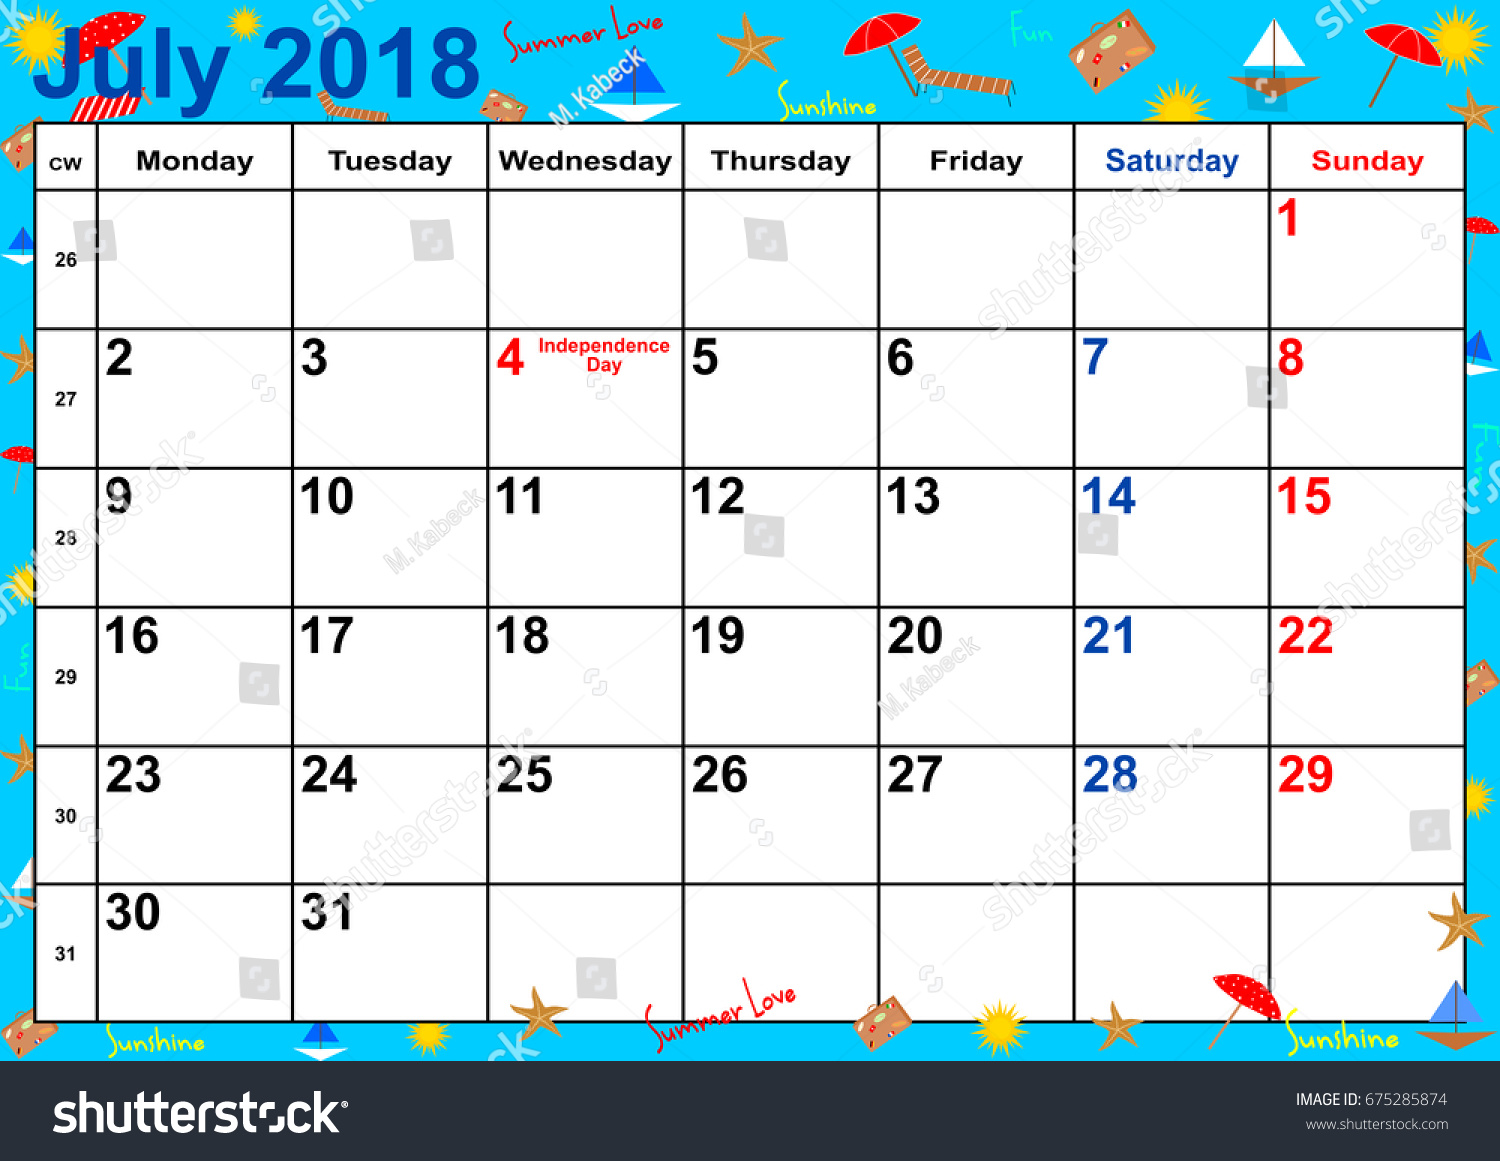 calendar-2018-month-july-public-holidays-stock-vector-675285874